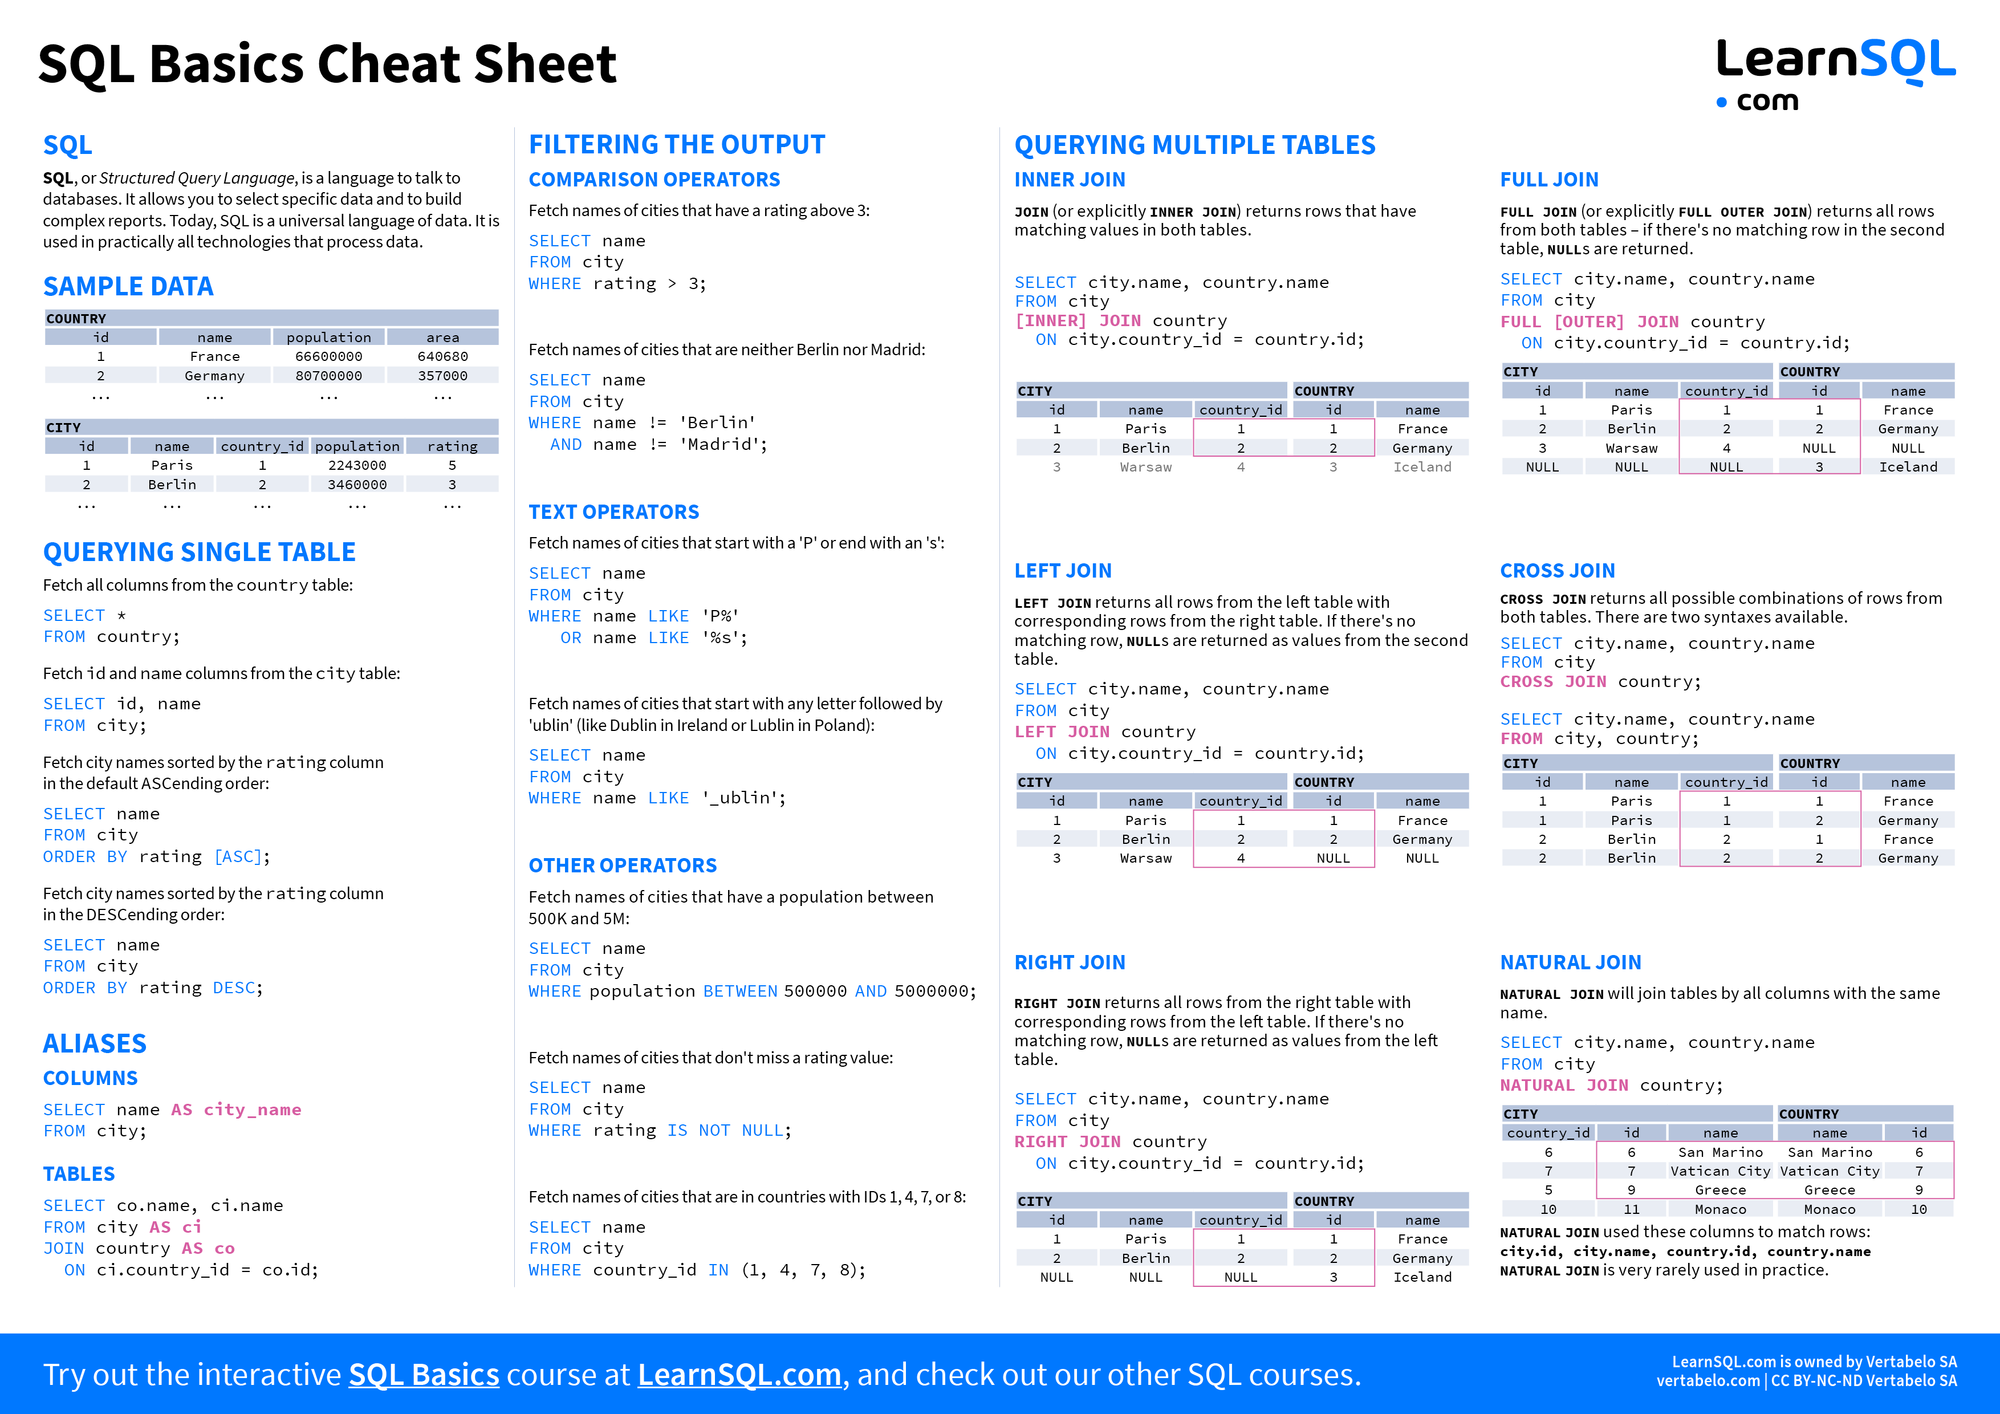 SQL Basics Cheat Sheet Sql Basics Cheat Sheet Tutorial Blog